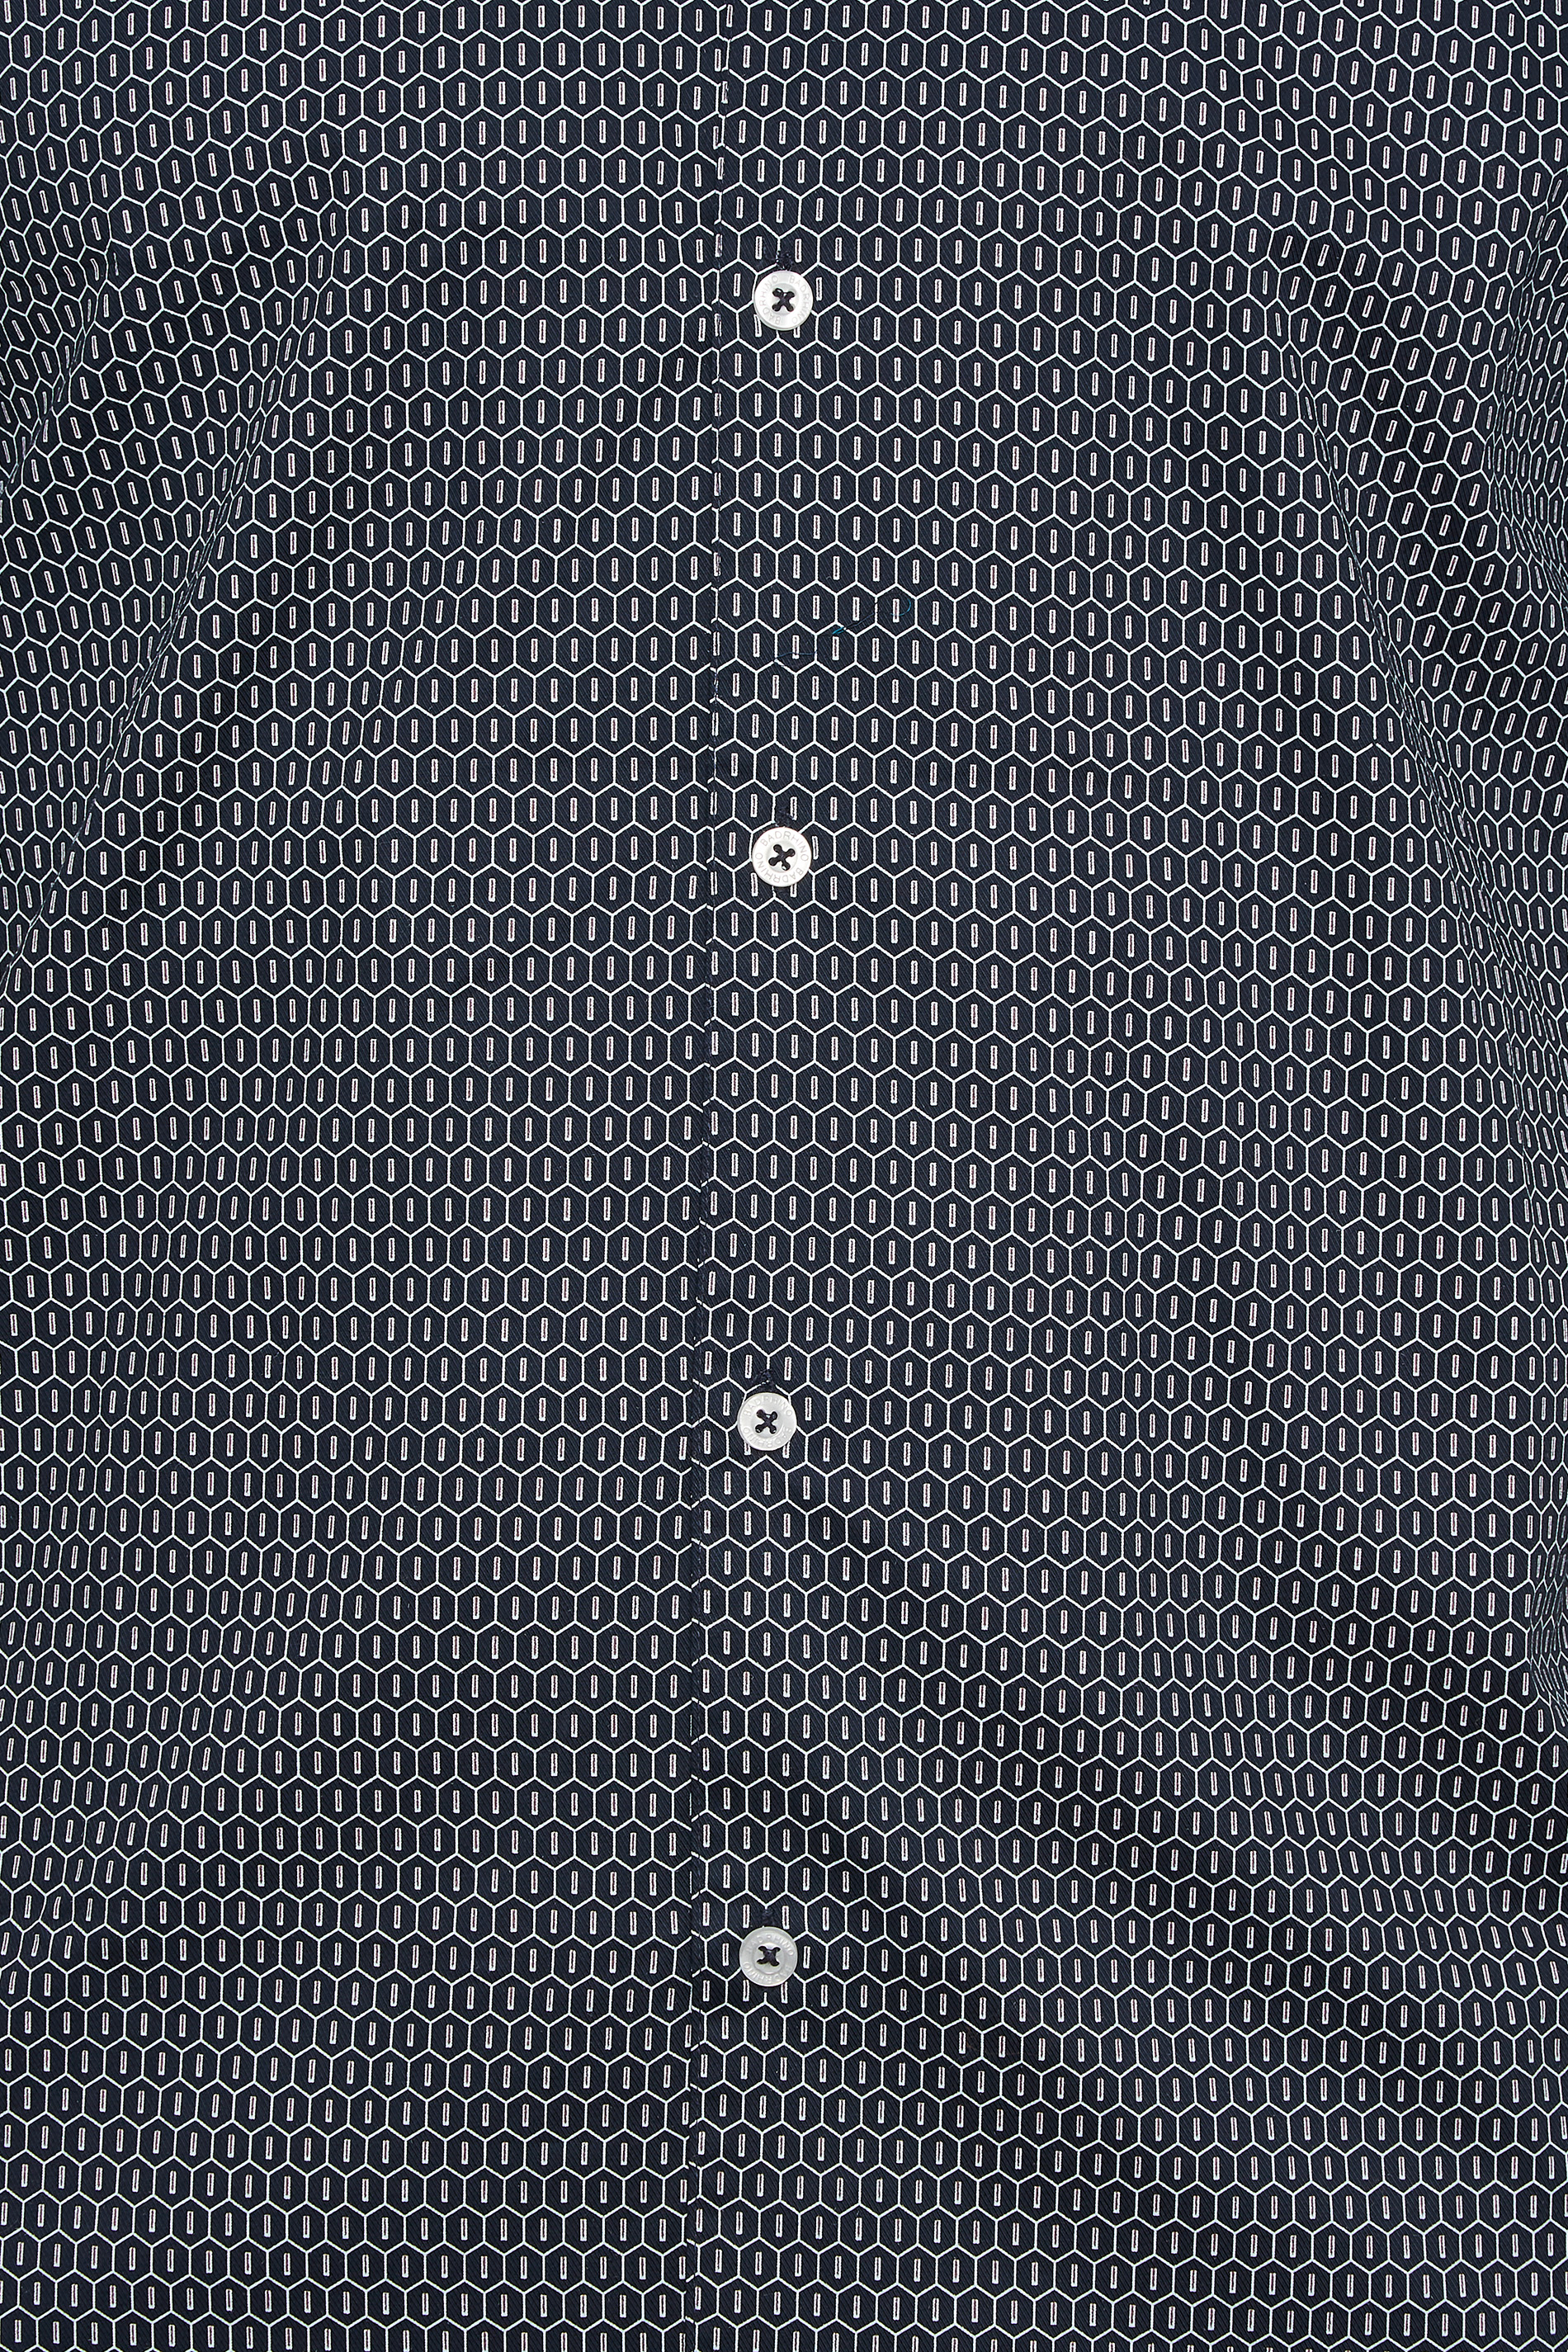 BadRhino Big & Tall Navy Blue Geometric Print Shirt | BadRhino 2